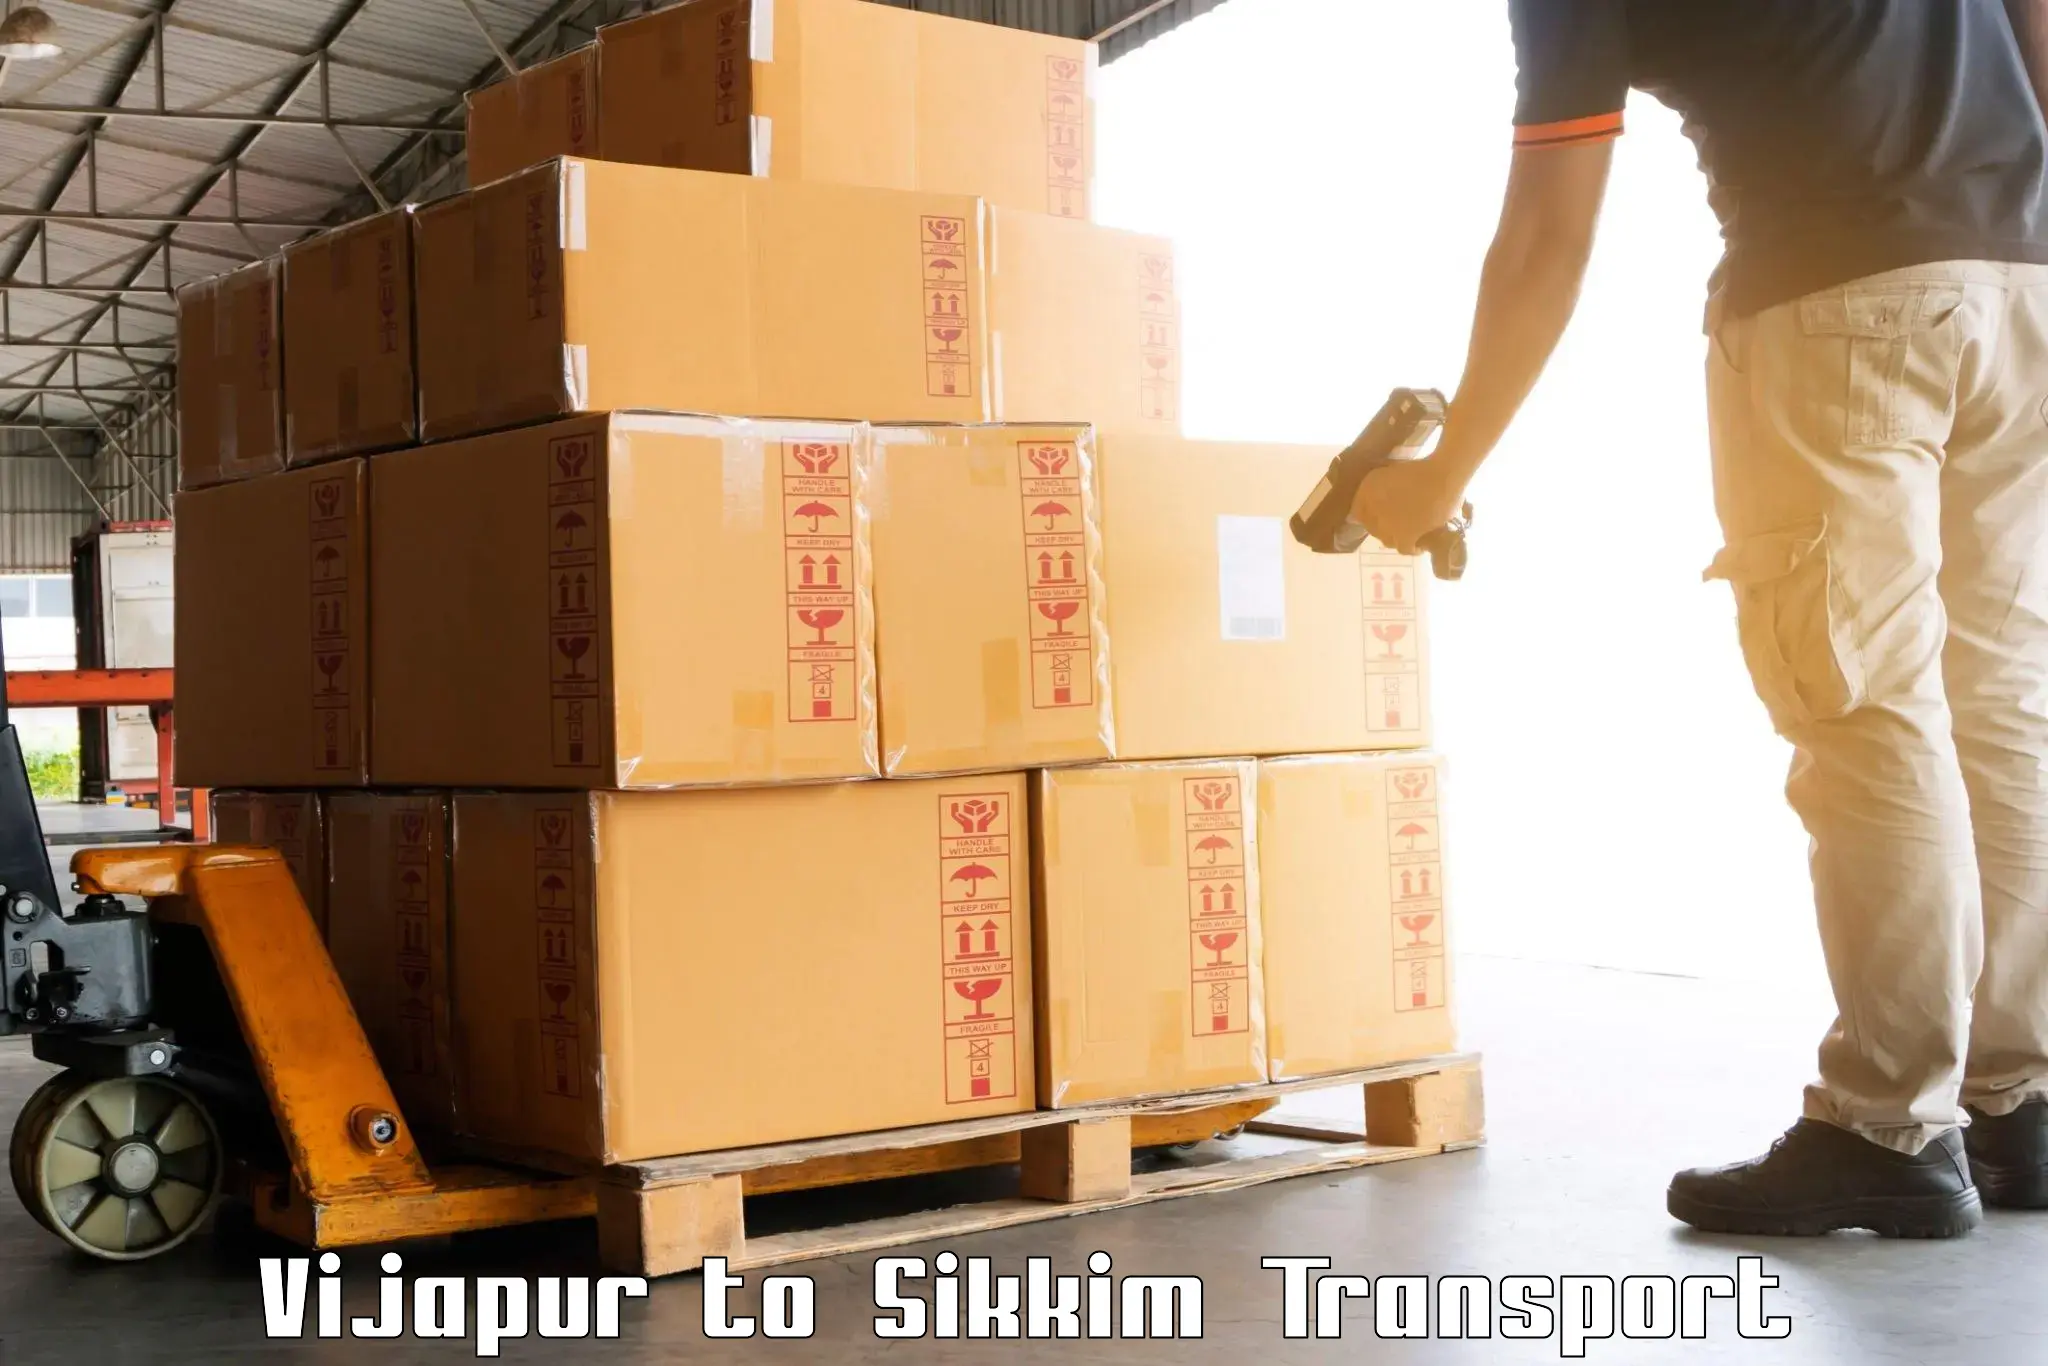 Online transport service Vijapur to Gangtok